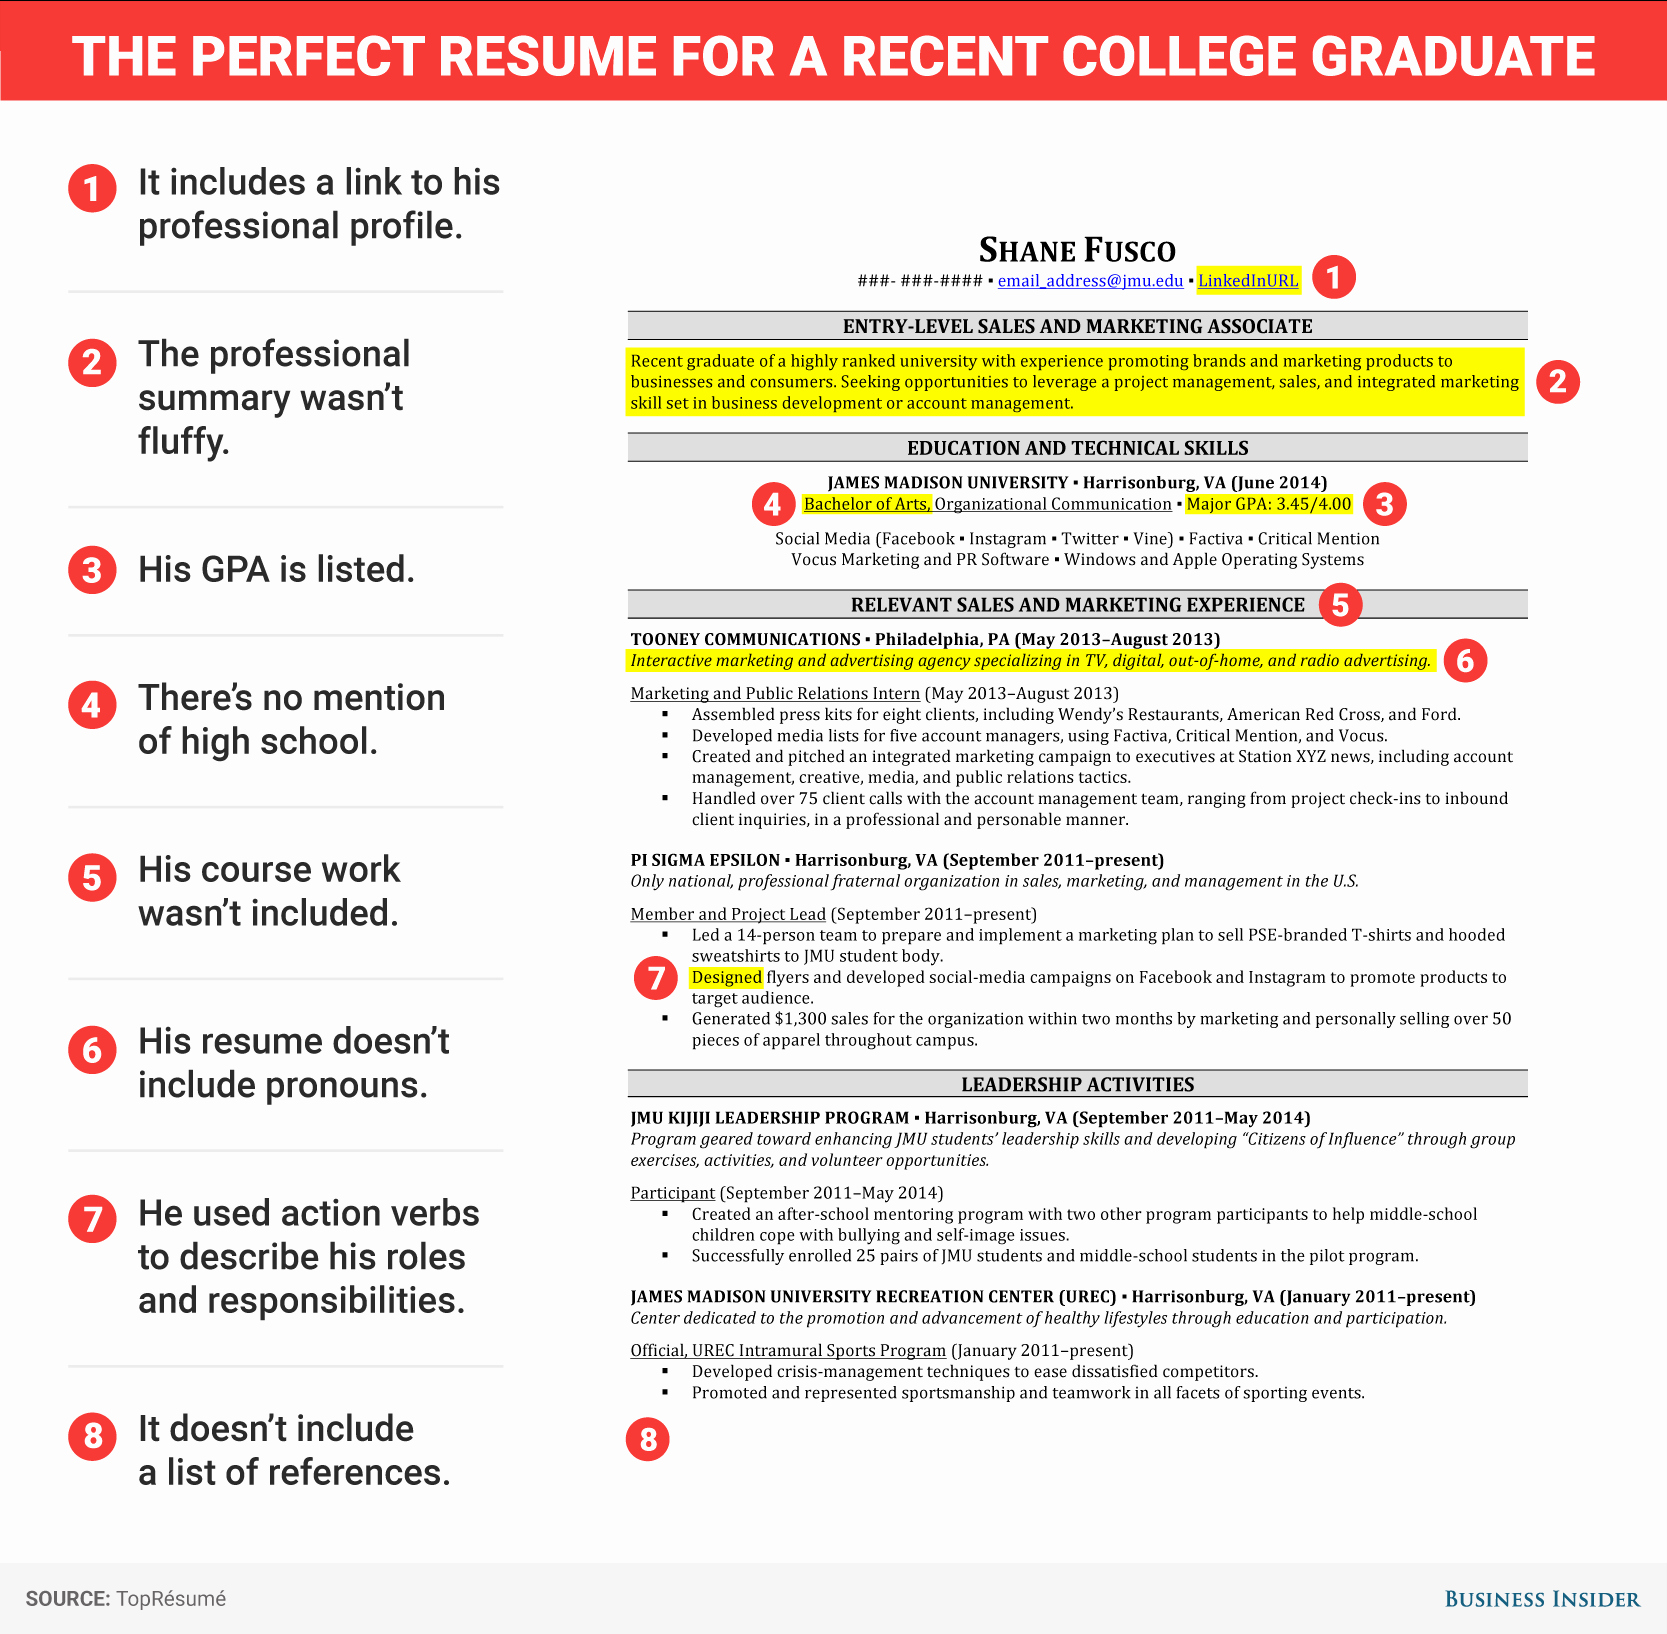 Excellent Resume for Recent College Grad Business Insider